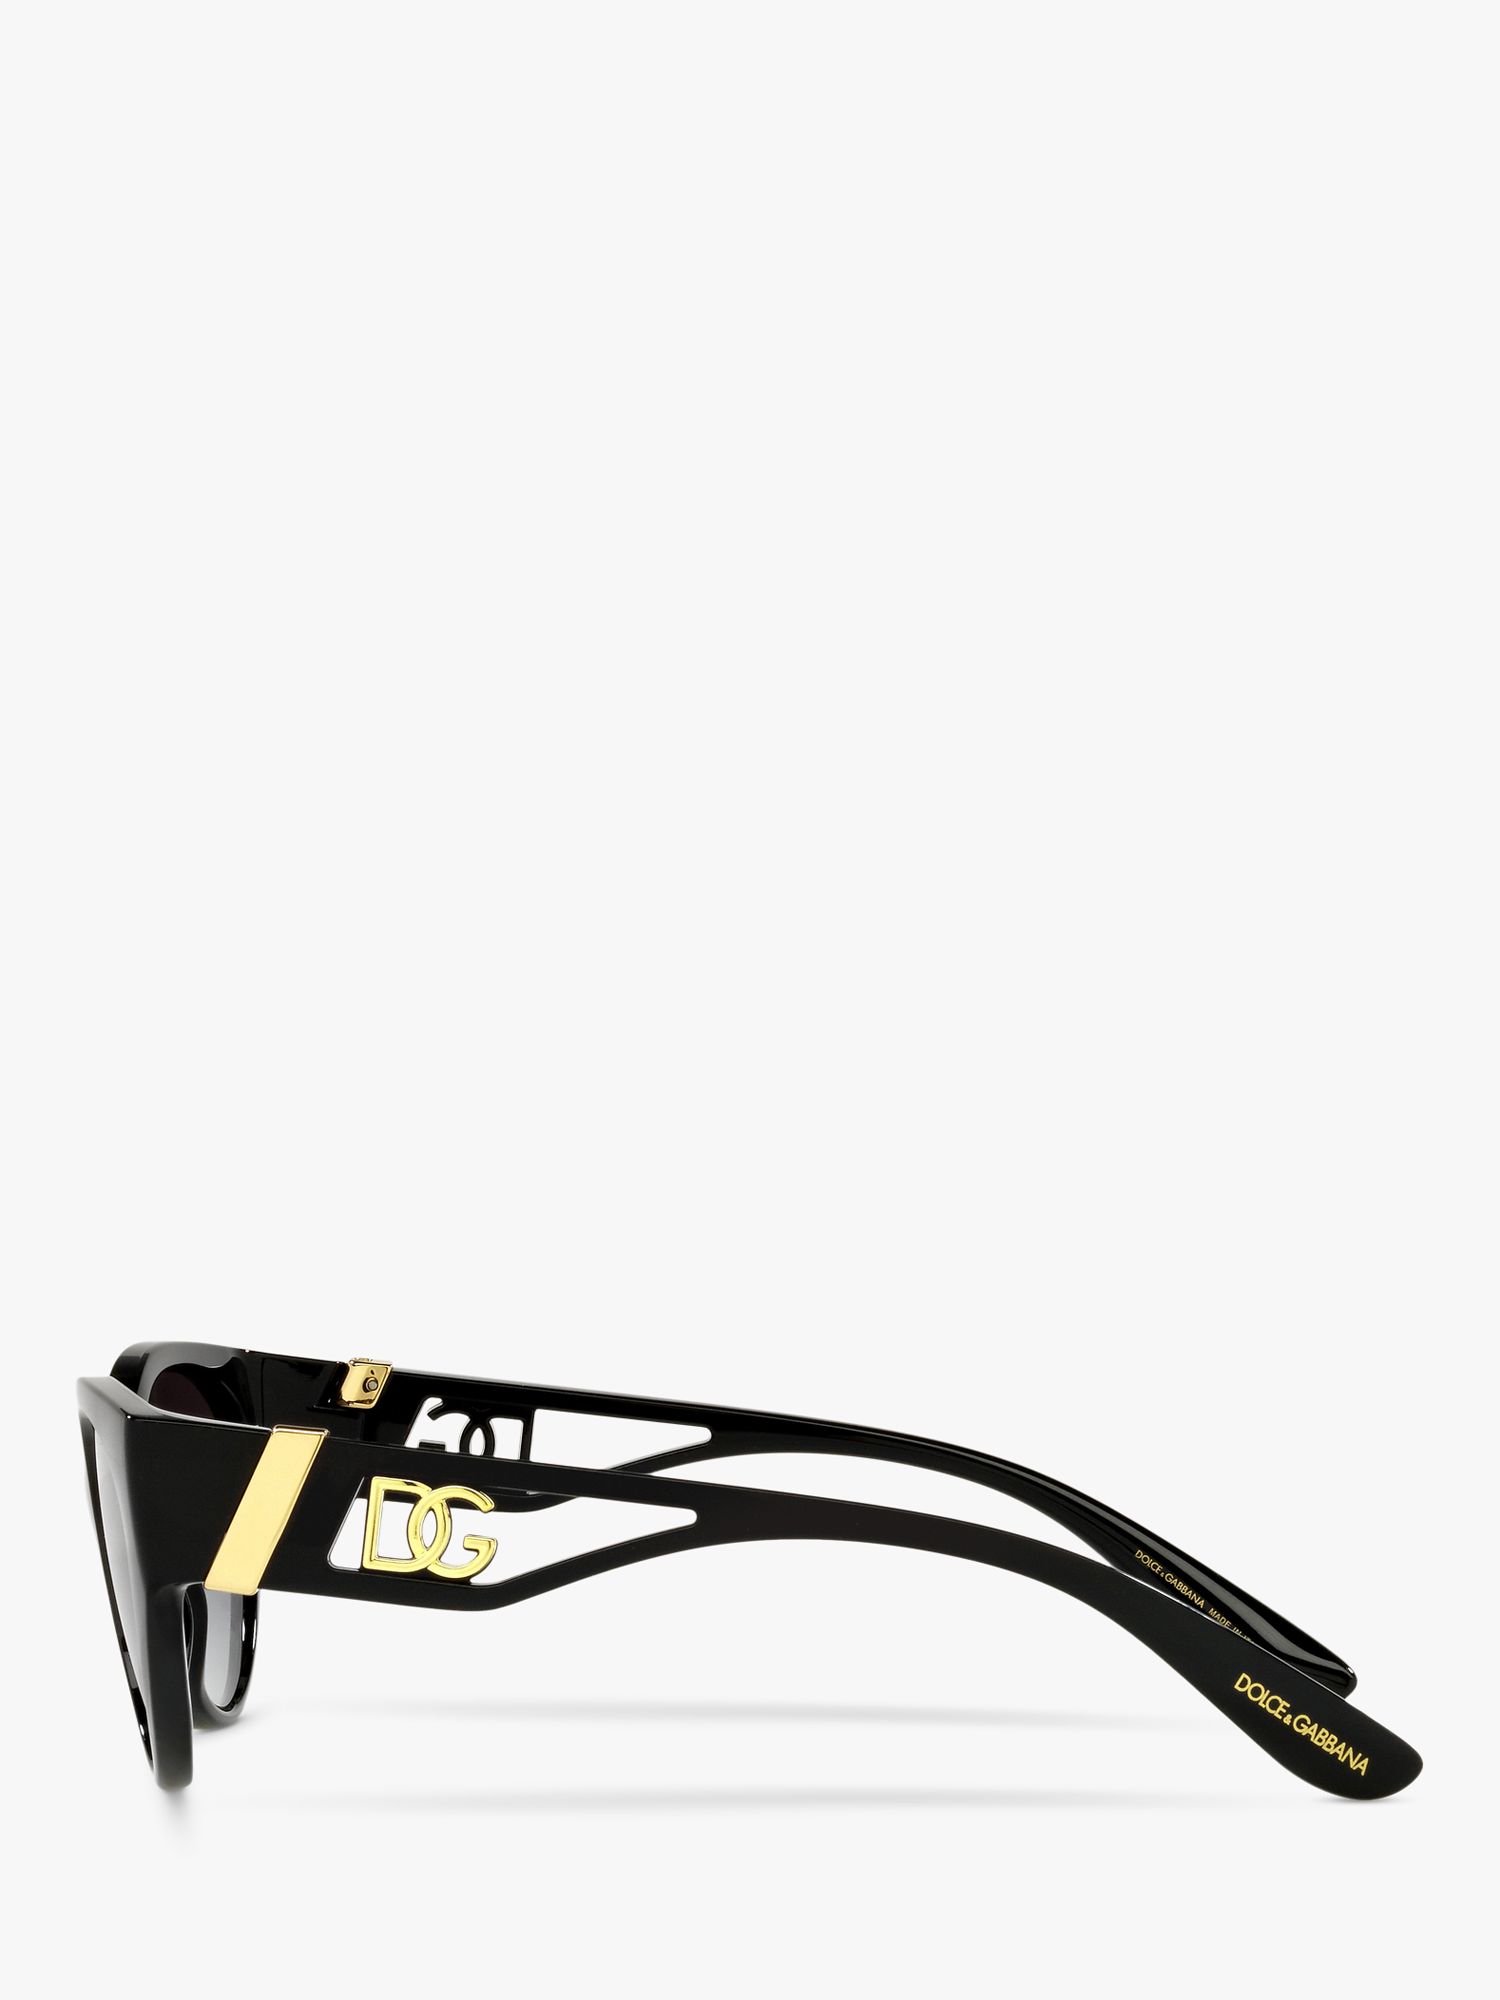 Dolce & Gabbana DG6146 Women's Cat's Eye Sunglasses, Black/Grey Gradient